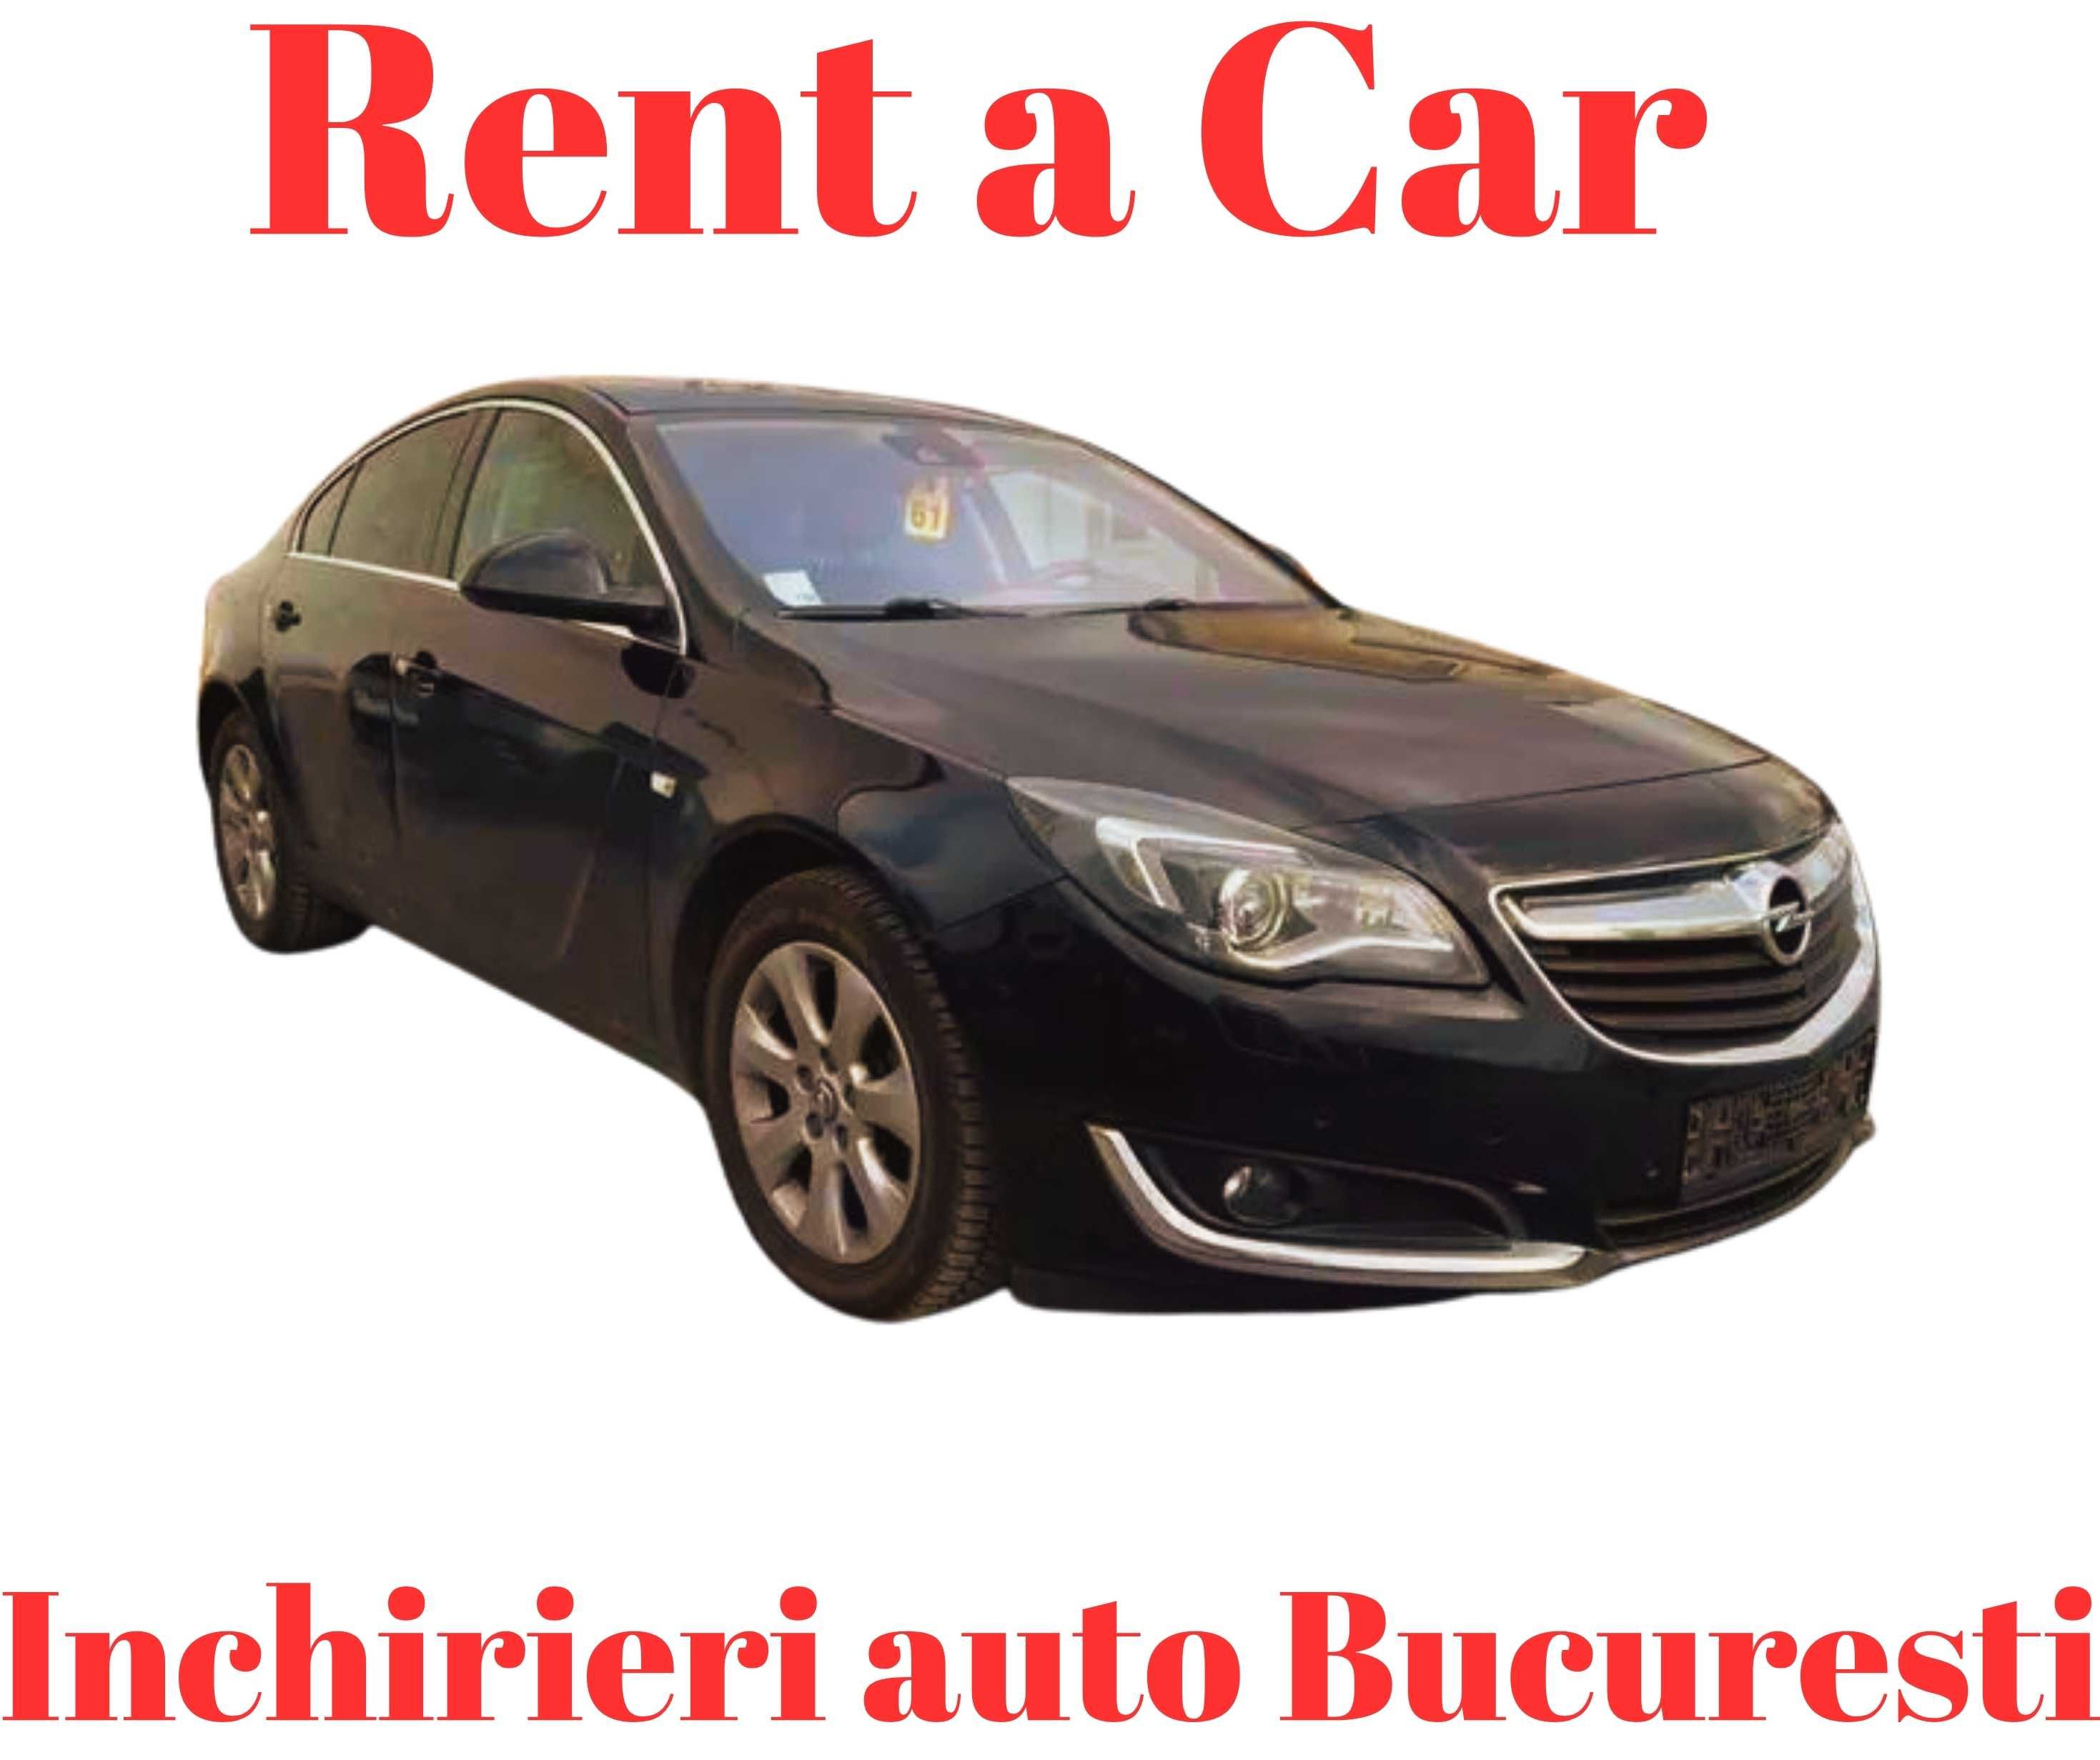 Inchirieri Auto Bucuresti - Aeroport Otopeni - Rent A Car Bucharest